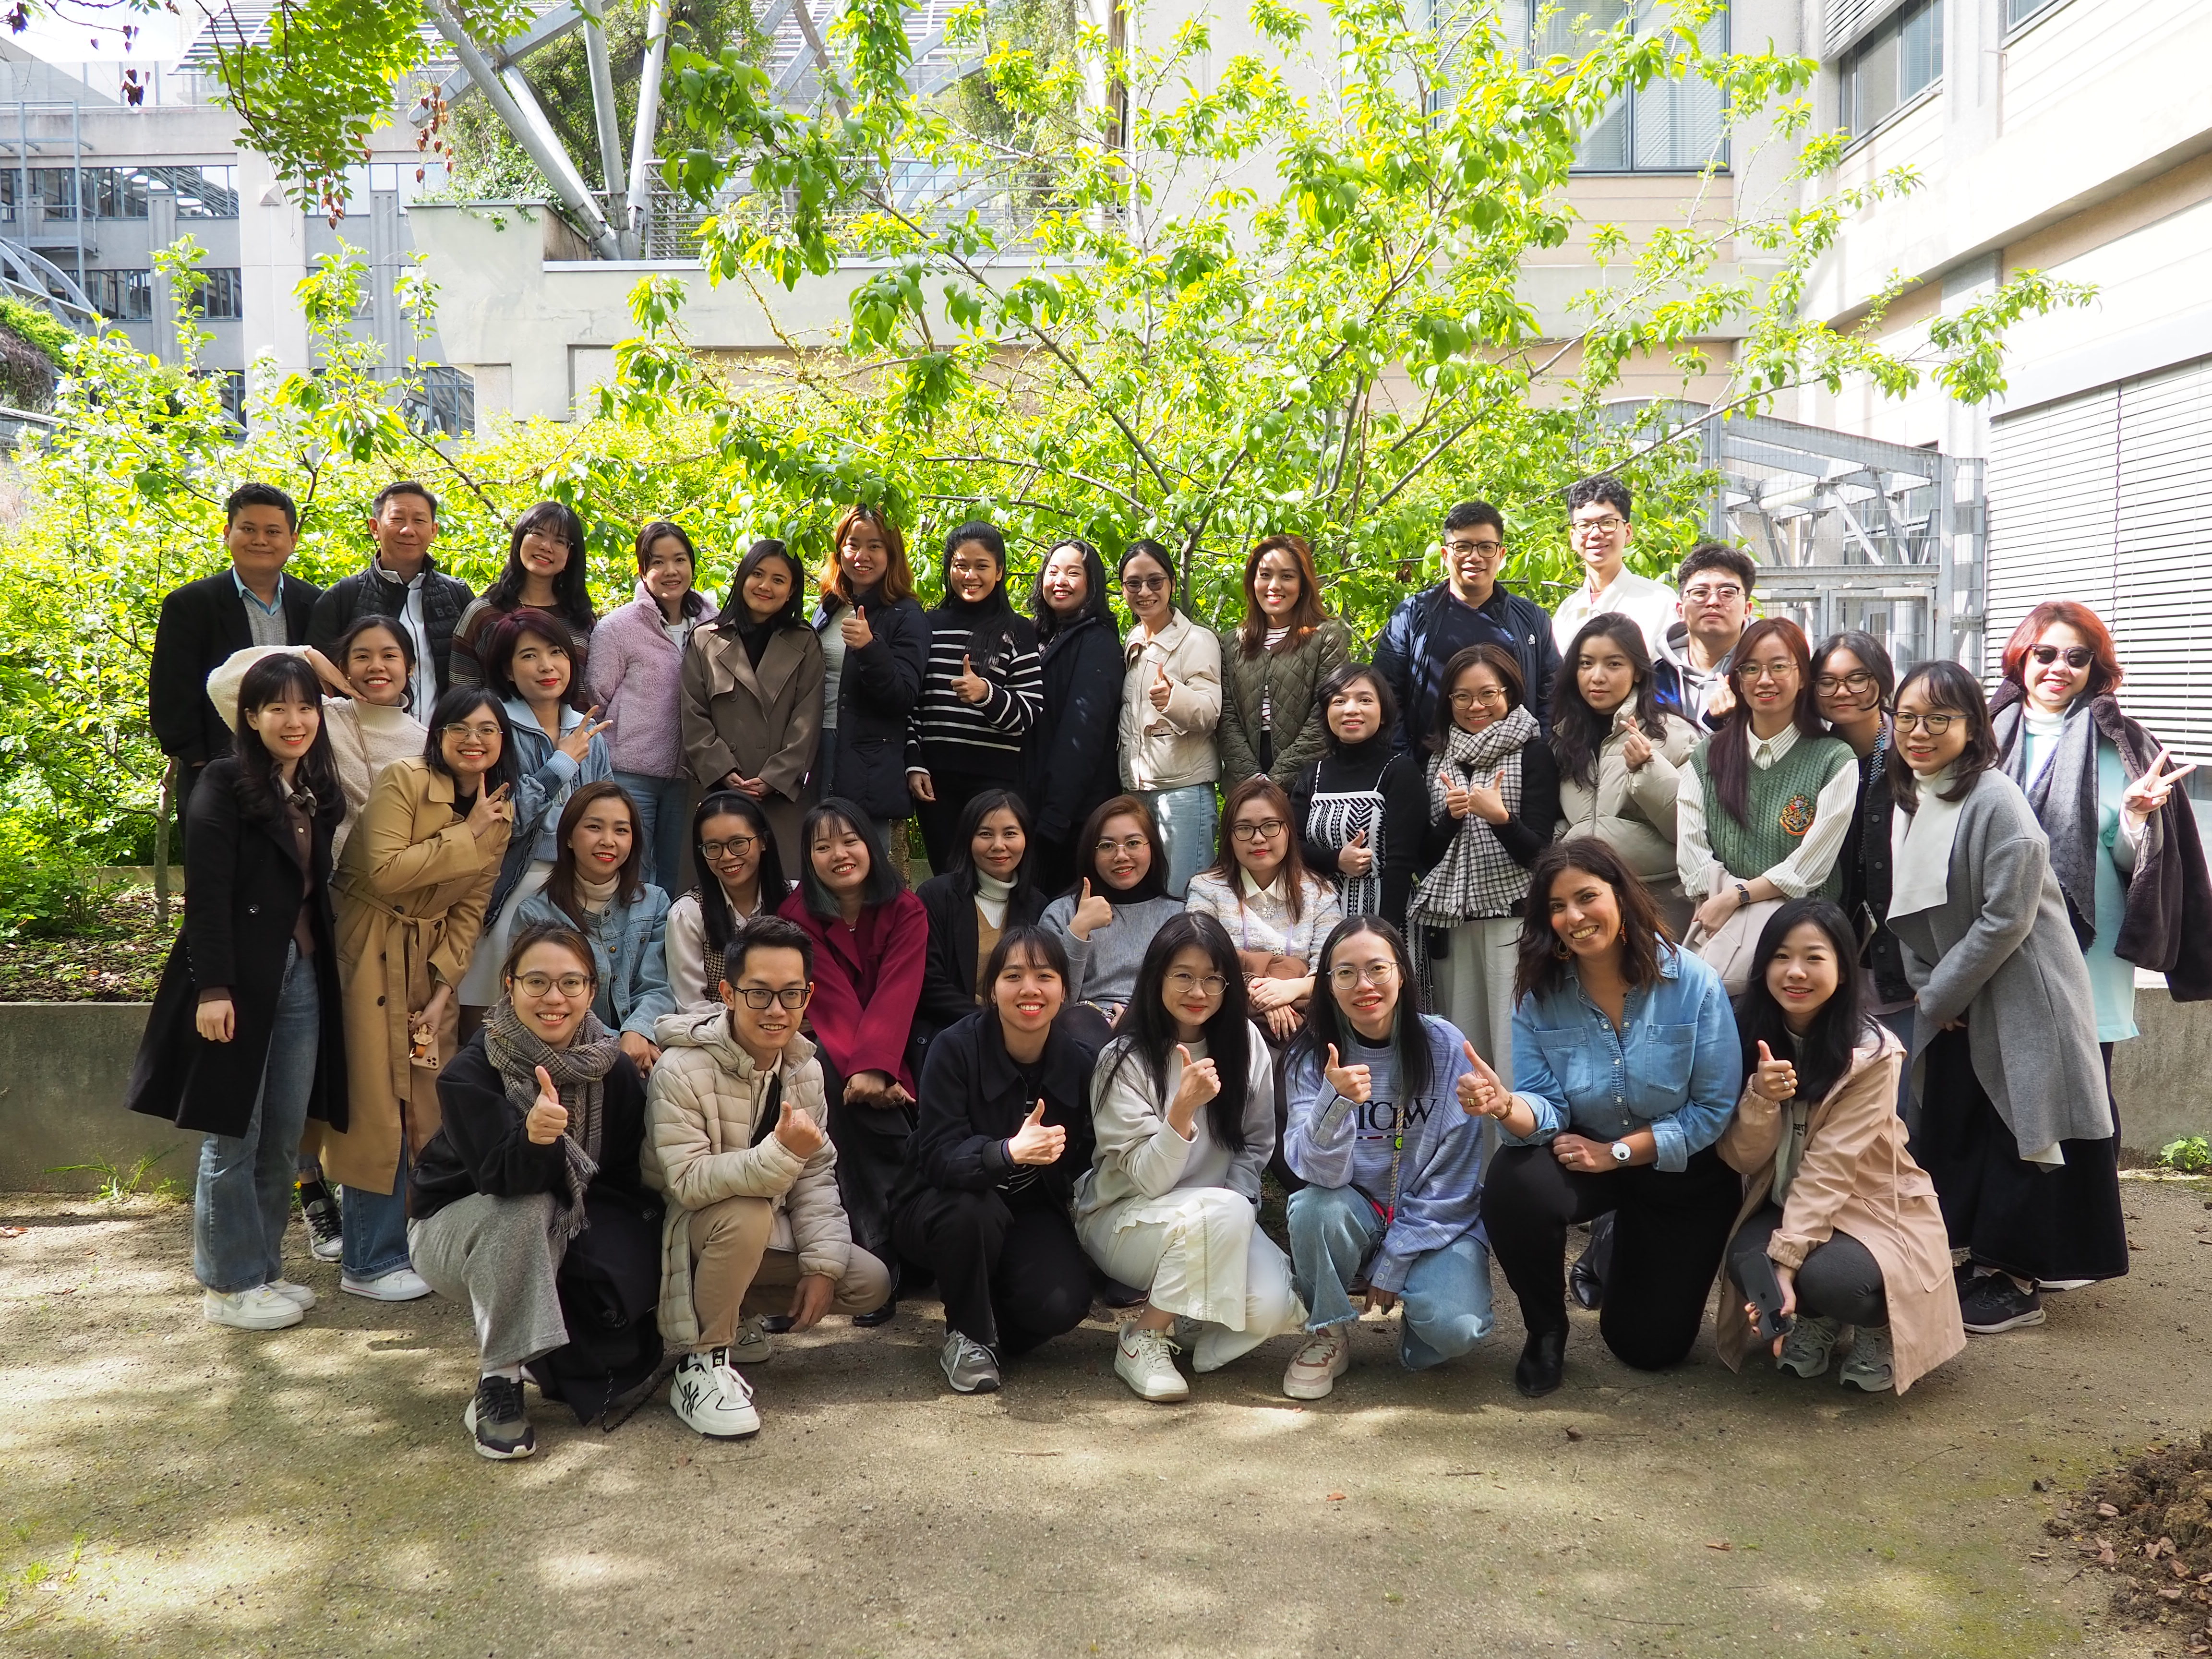 Vietnamese students pictured on the IAE Paris-Sorbonne biopark campus